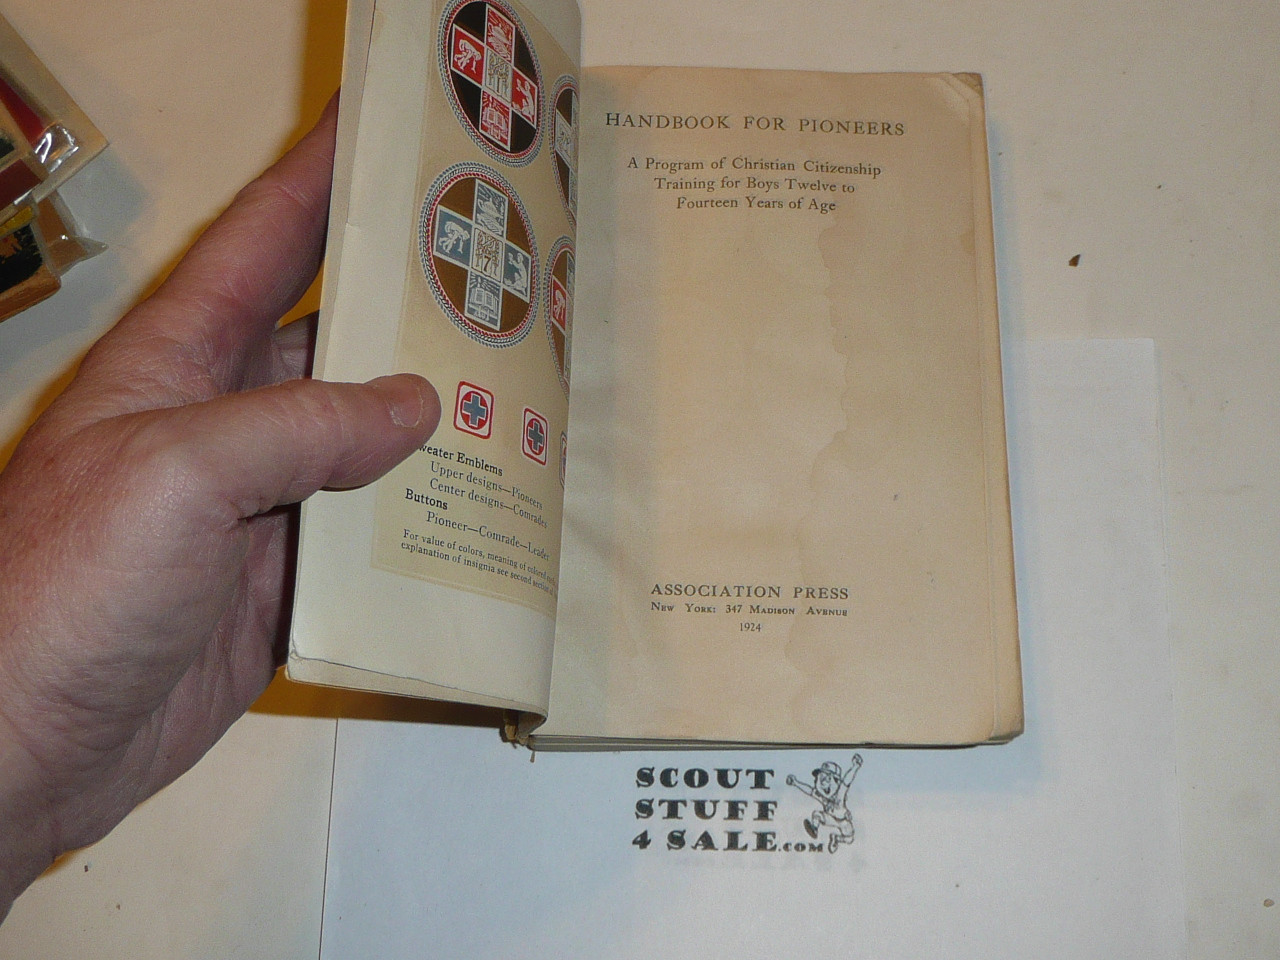 1924 Handbook for Pioneers, Christian Citizenship Program, some spine wear